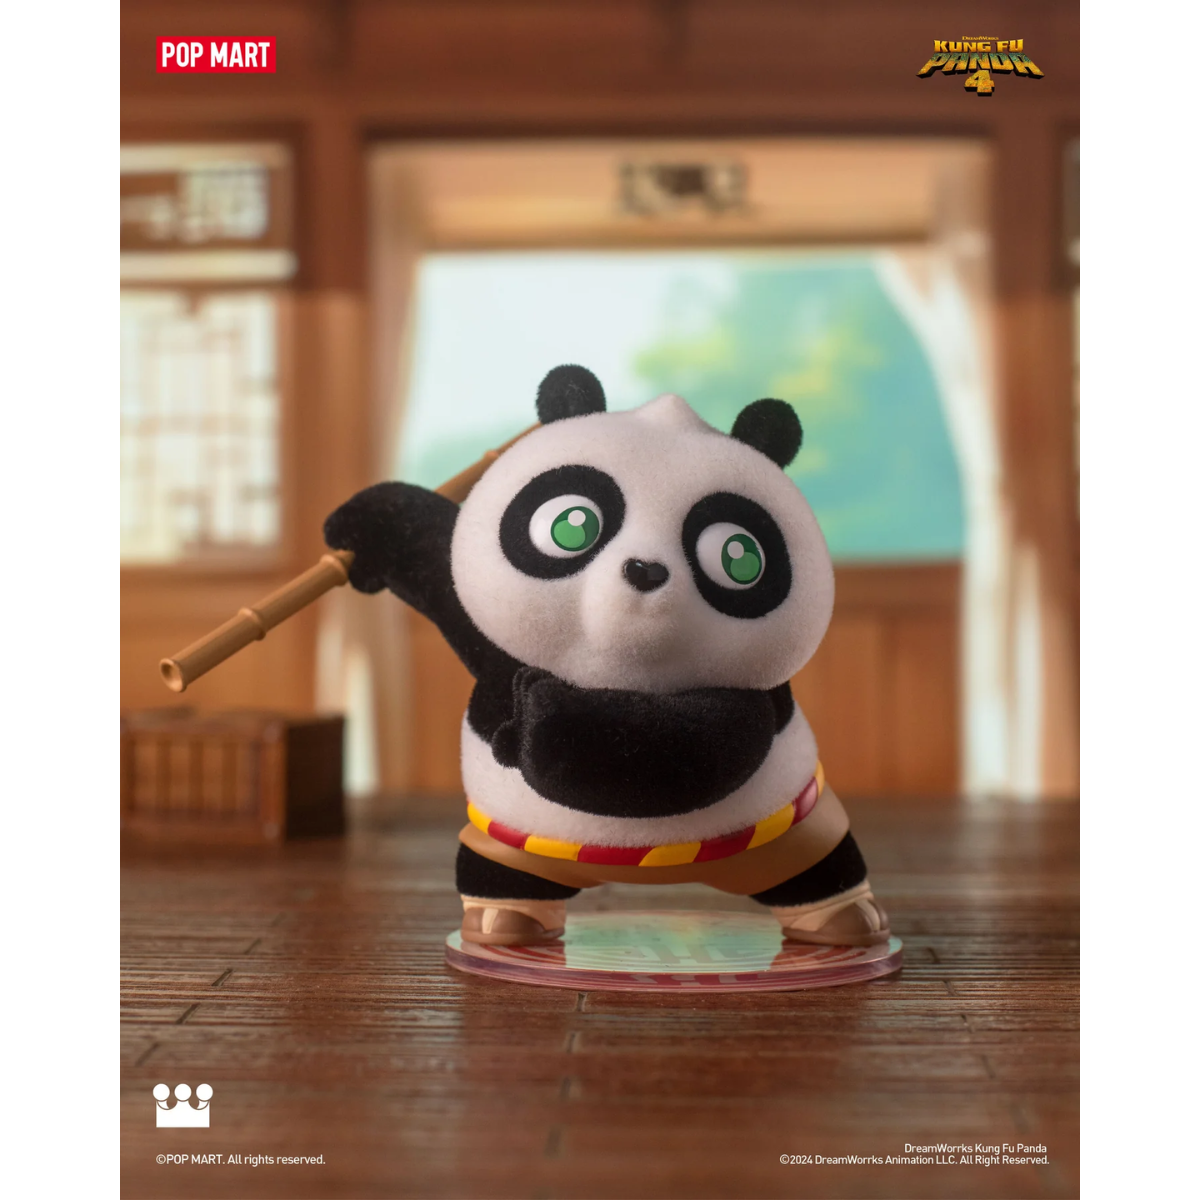 POP MART Universal Kung Fu Panda Series-Display Box (9pcs)-Pop Mart-Ace Cards & Collectibles